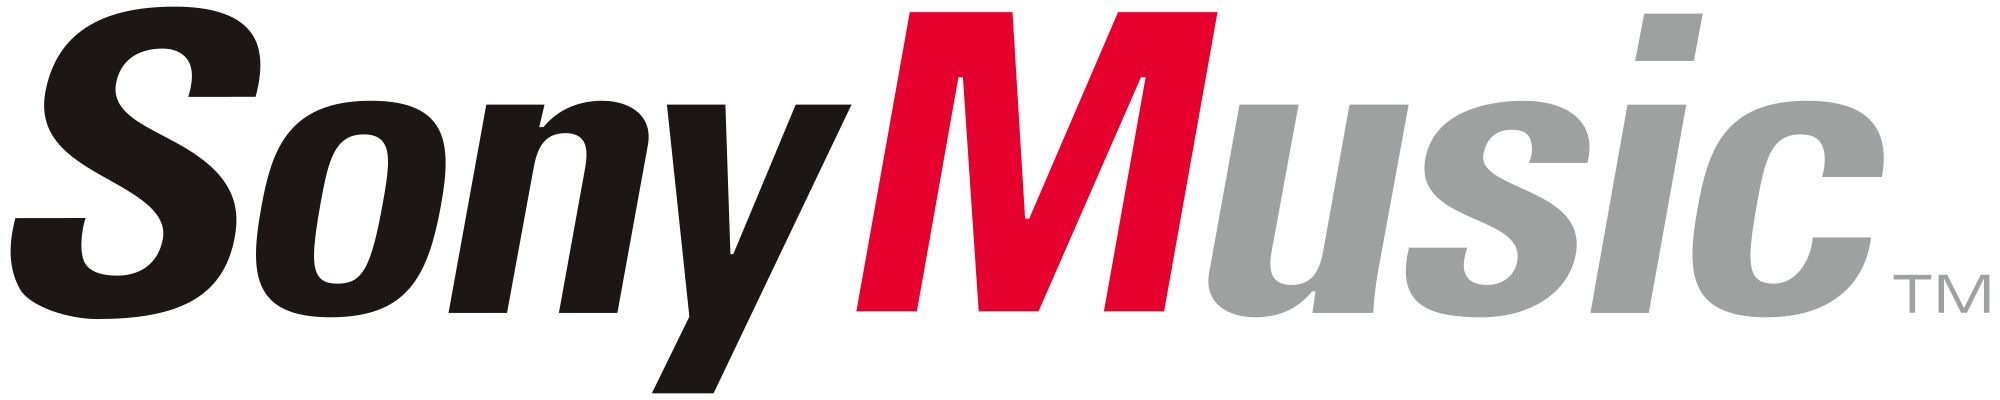 Sony Music Entertainment Logo